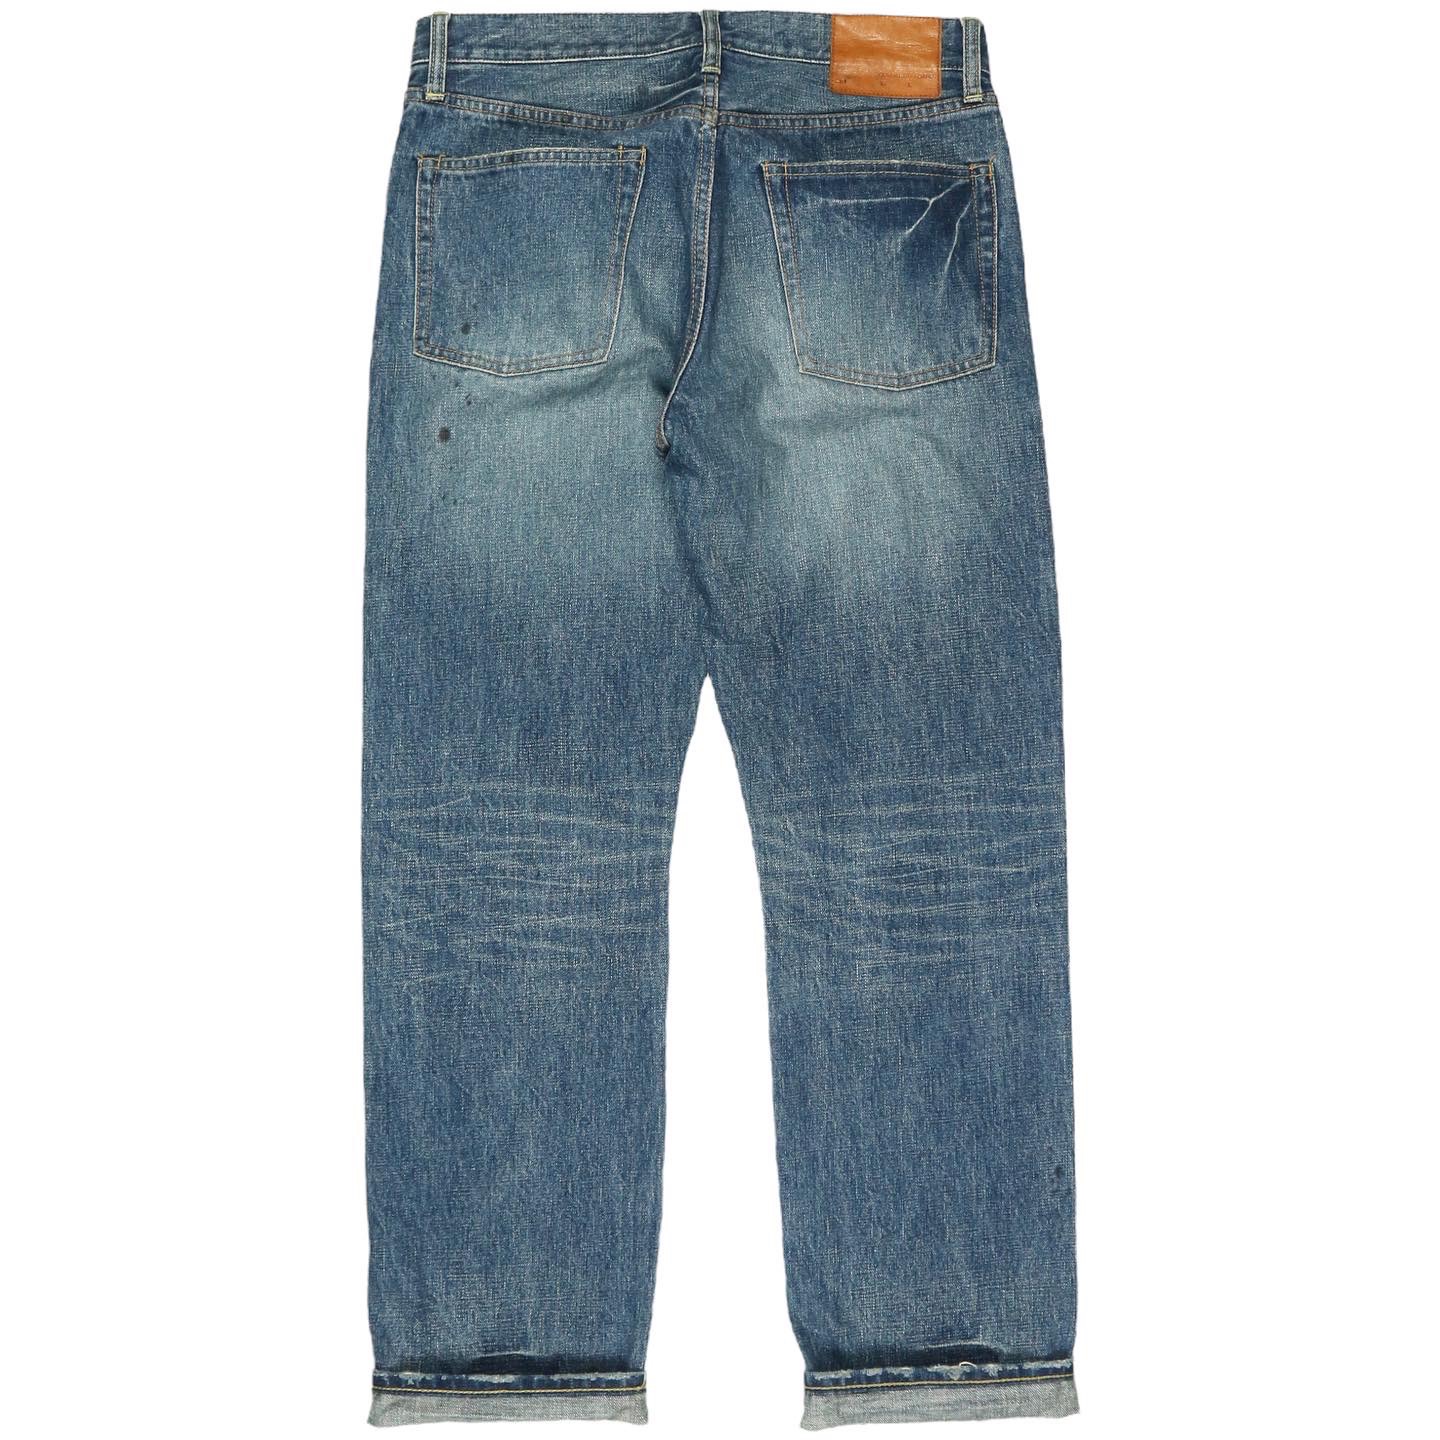 Journal Standard Selvedge Denim Jeans Size 30